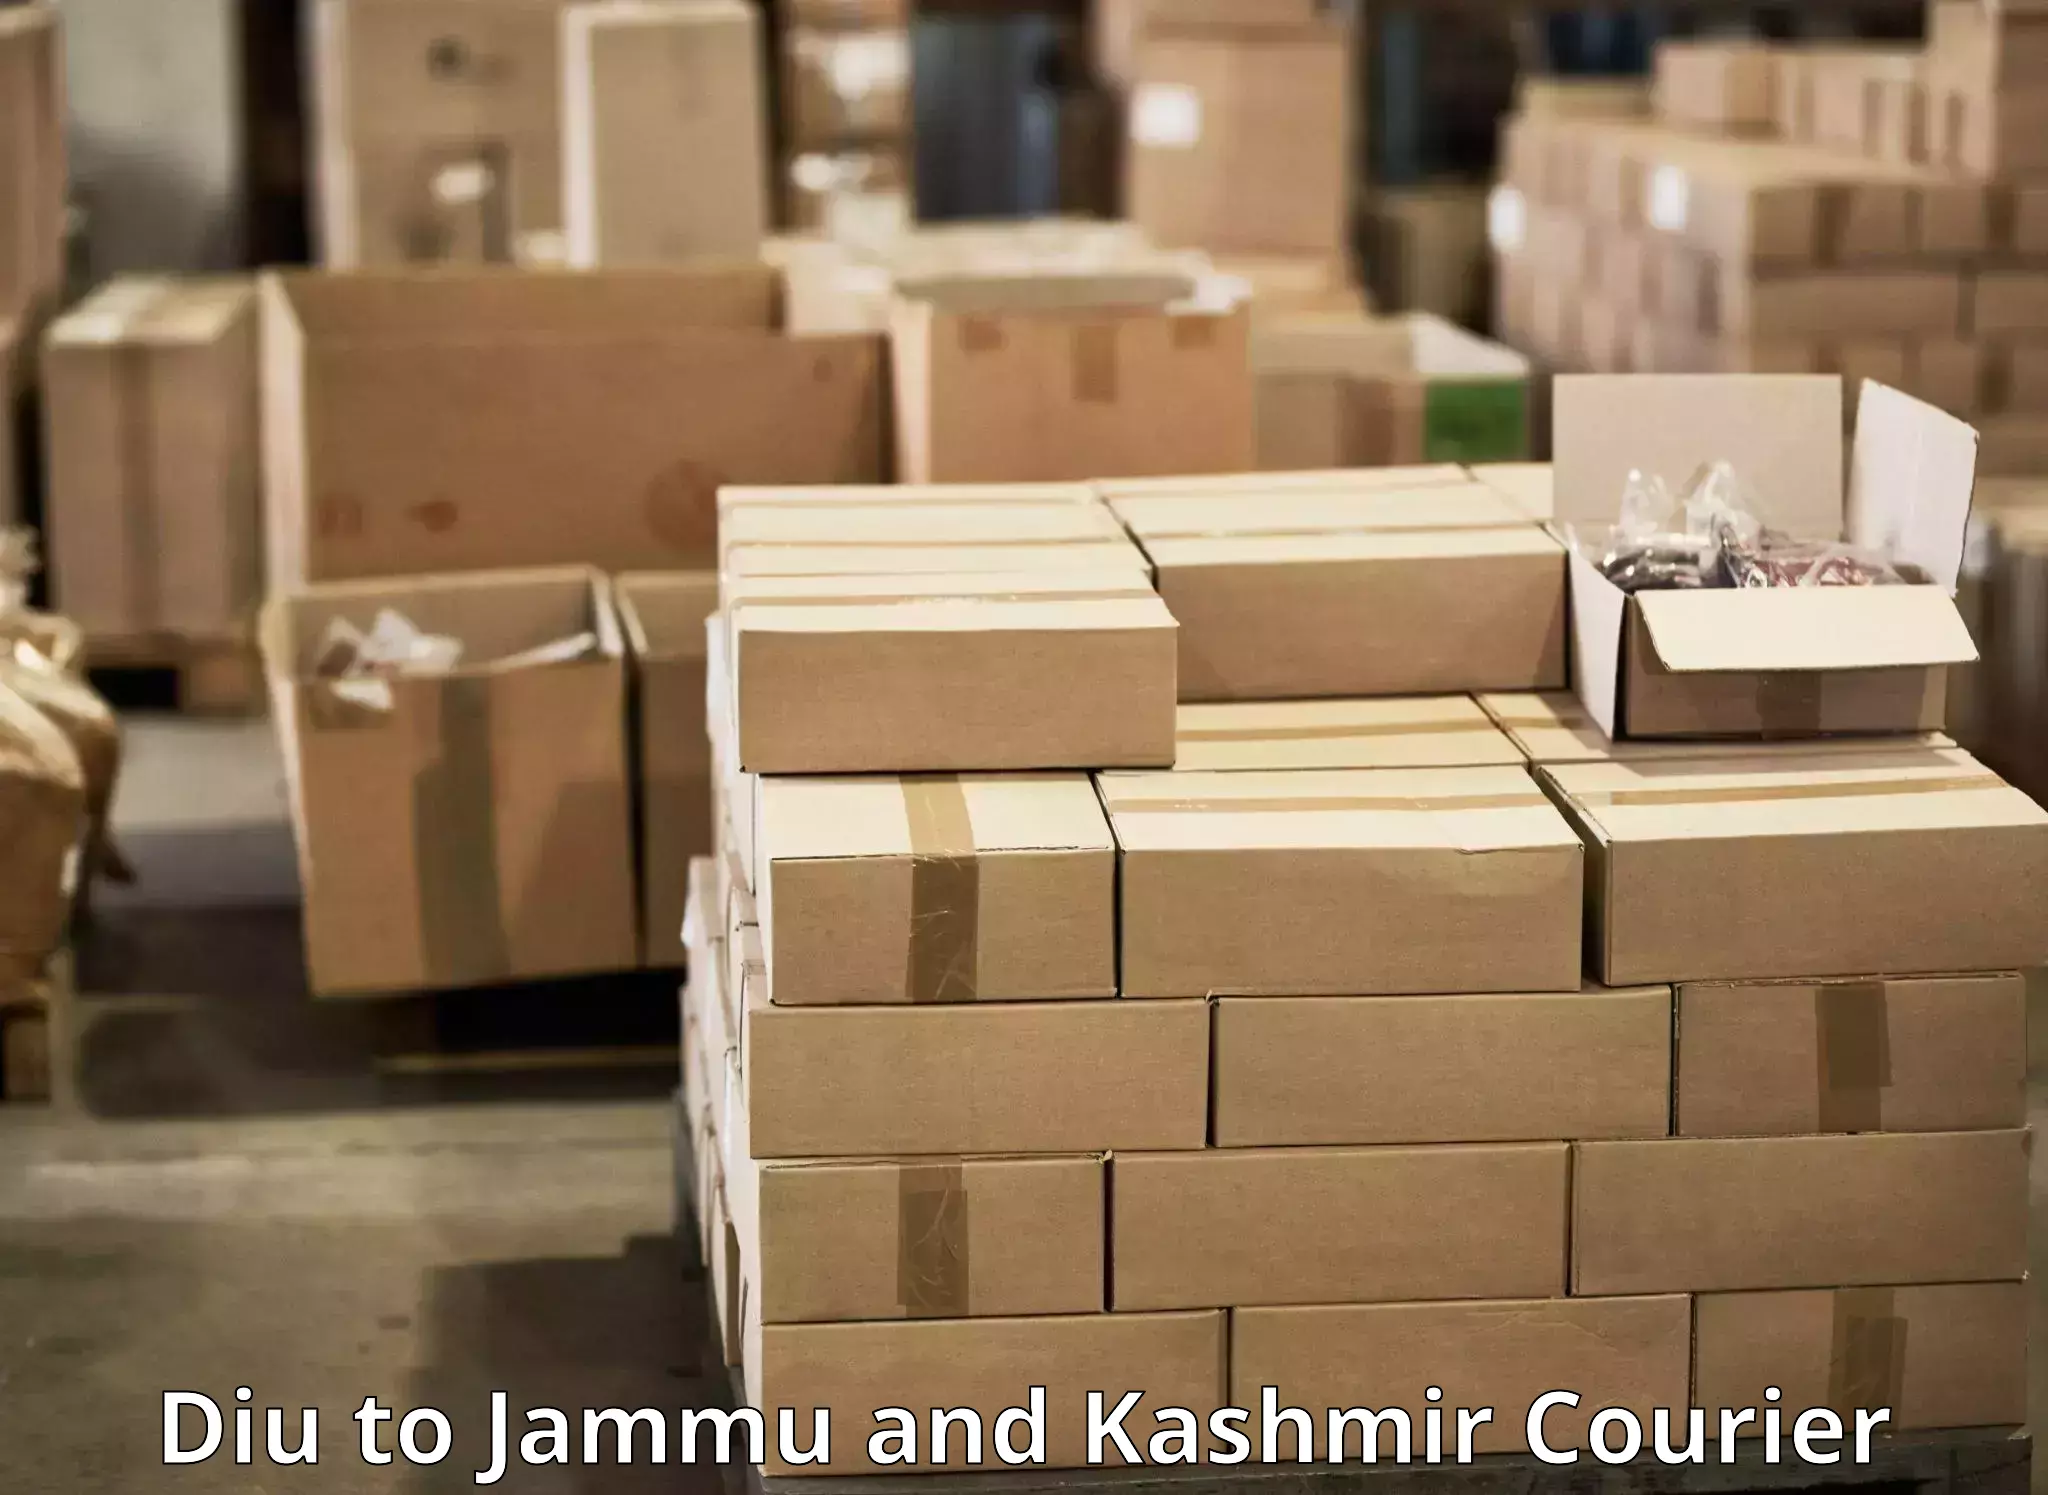 Courier service efficiency Diu to IIT Jammu